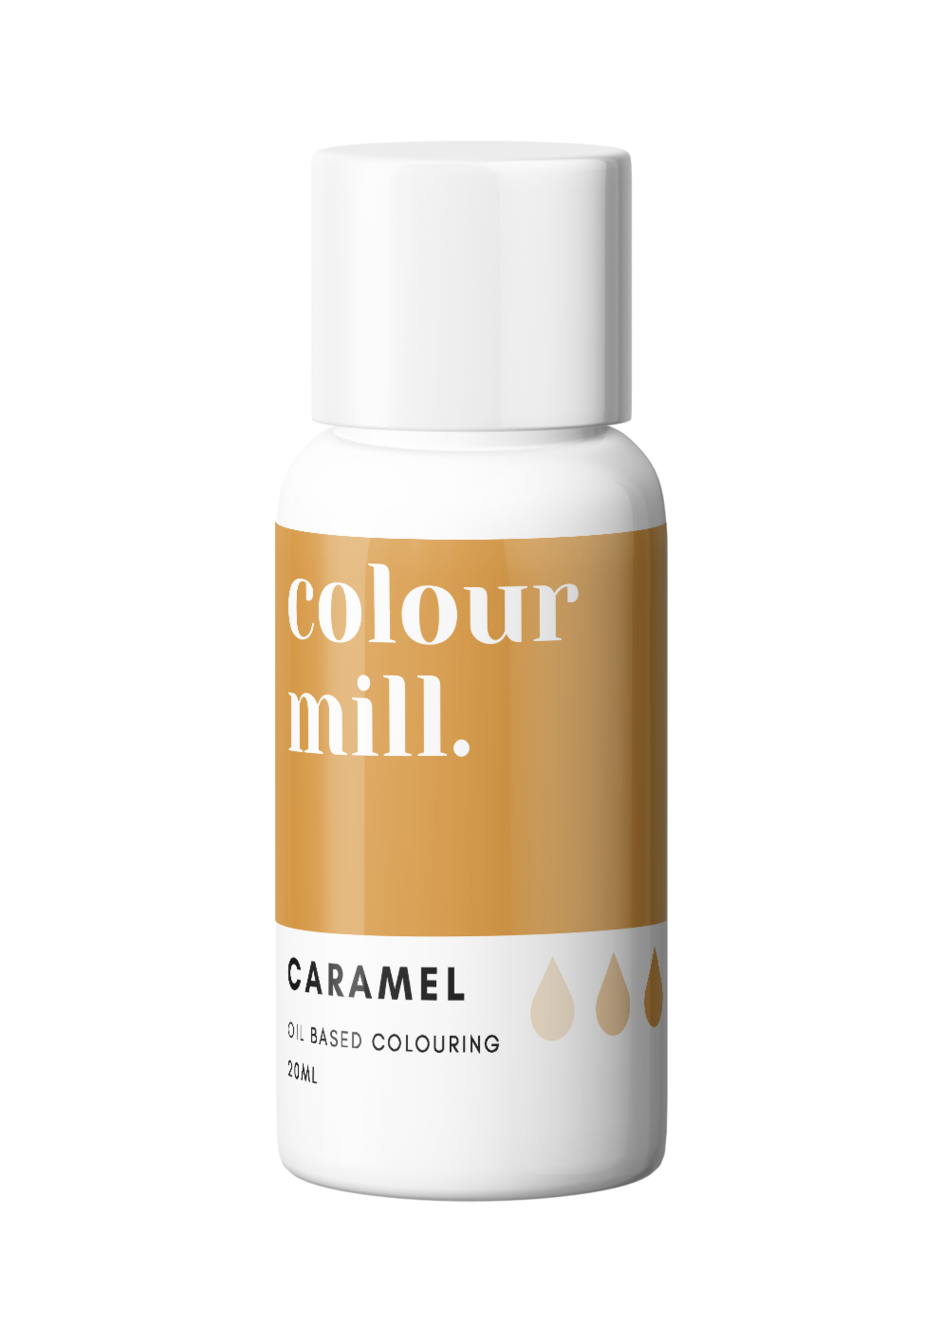 Caramel, 20ml, Colour Mill Oil Based Colouring